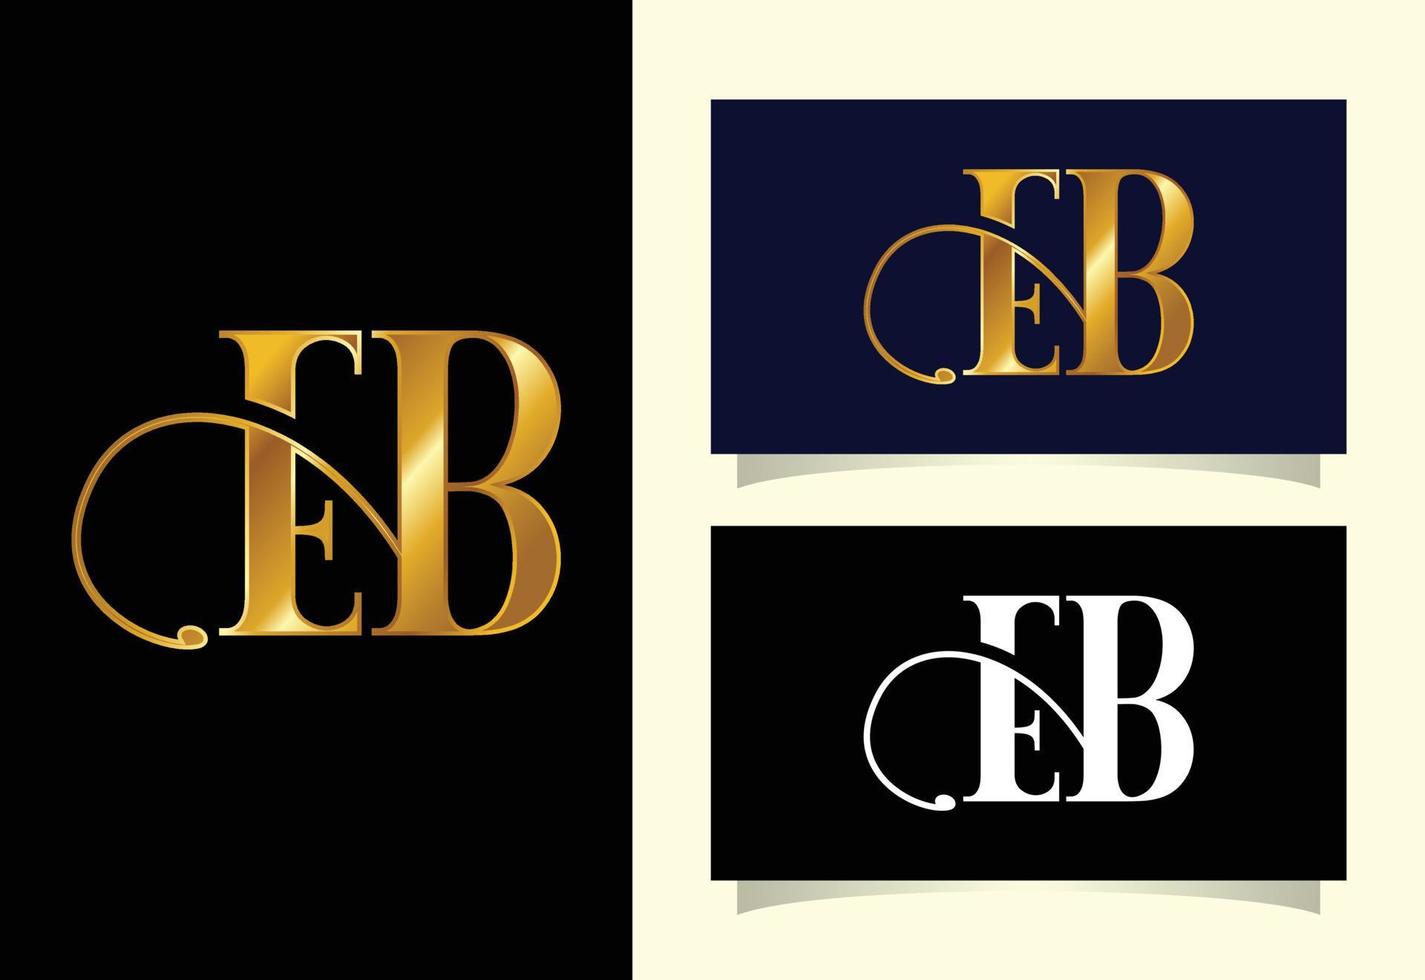 Initial Letter E B Logo Design Vector. Graphic Alphabet Symbol For Corporate Business Identity vector